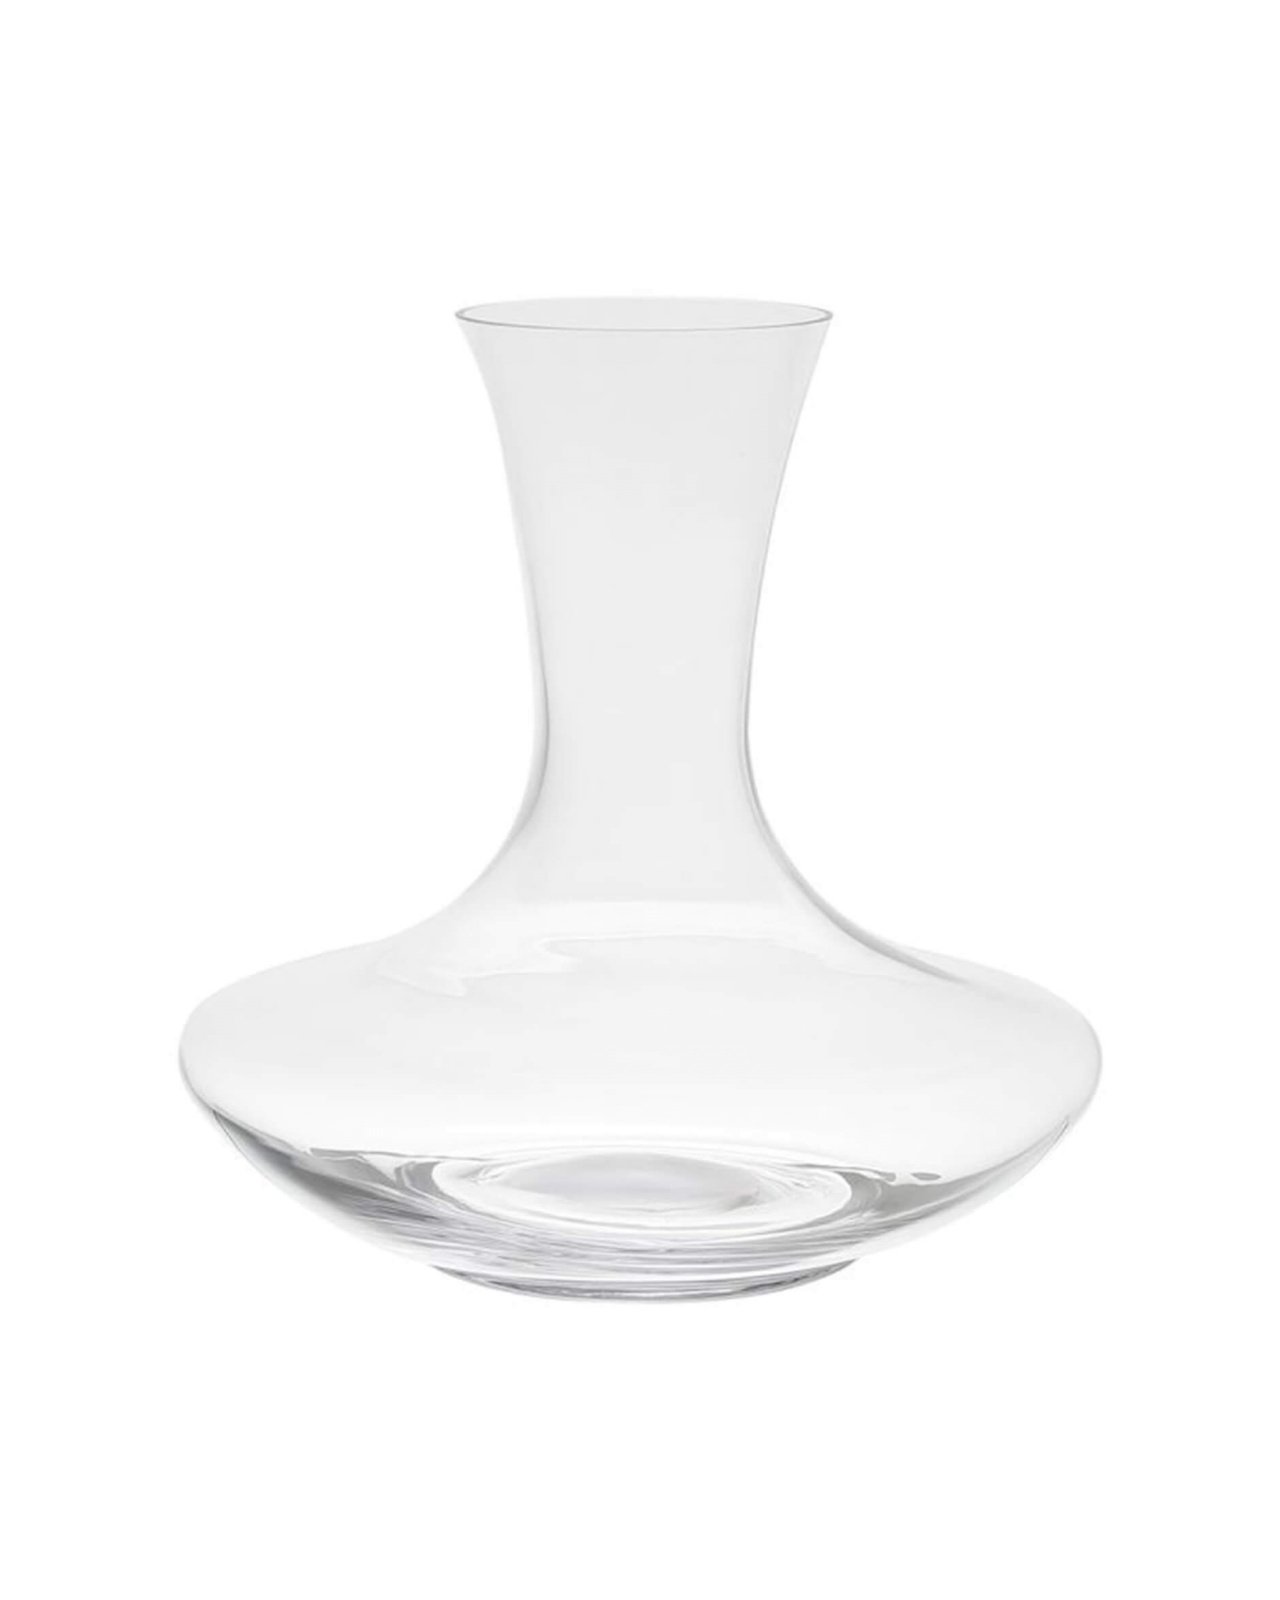 Sonoma Carafe Clear Glass